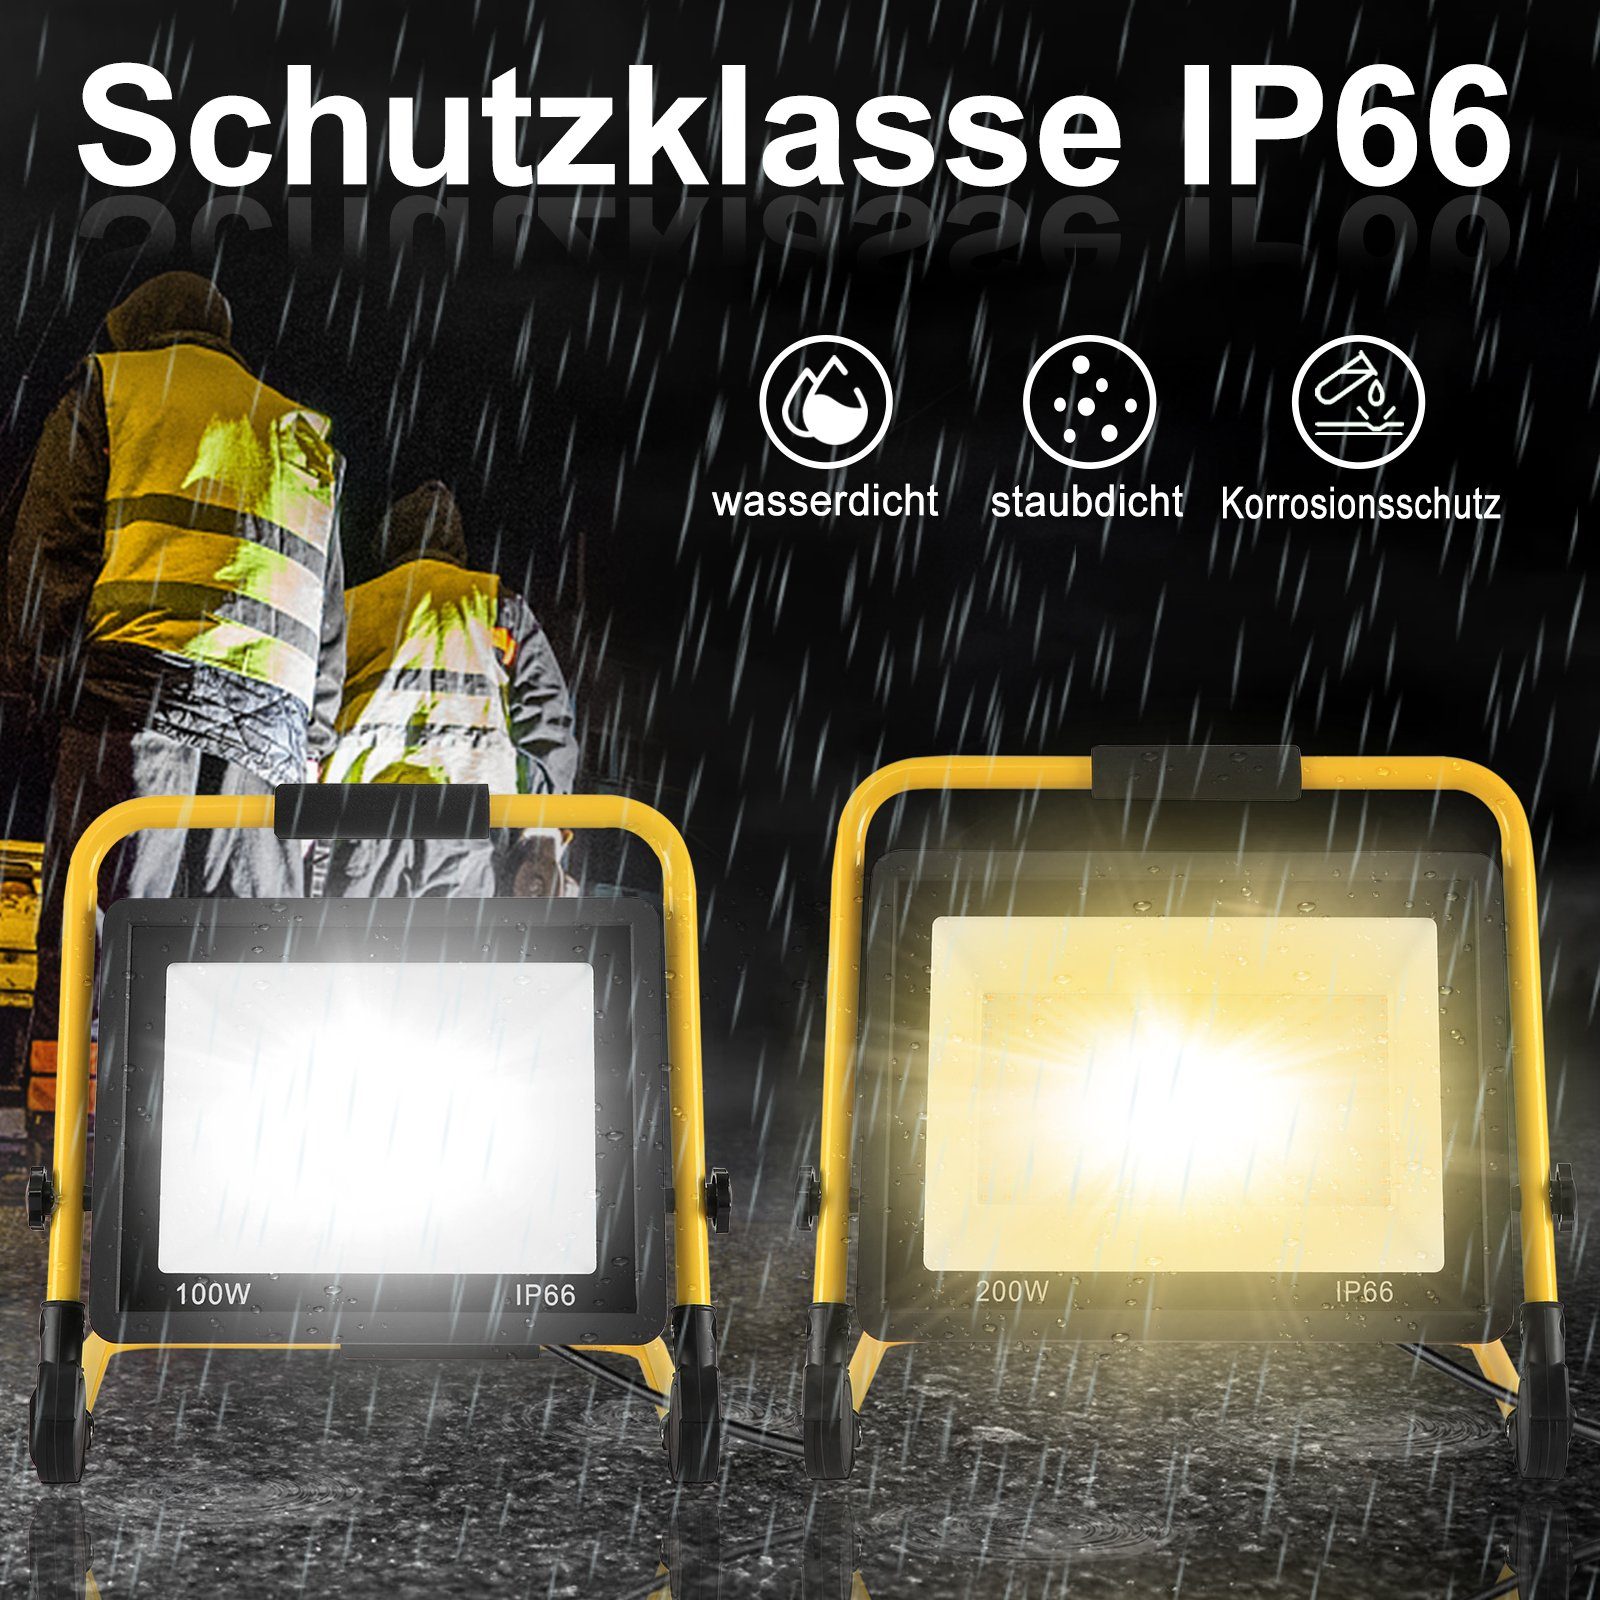 UISEBRT LED Strahler 200W LED Baustrahler Warmweiß Arbeitsscheinwerfer IP66 Fluter